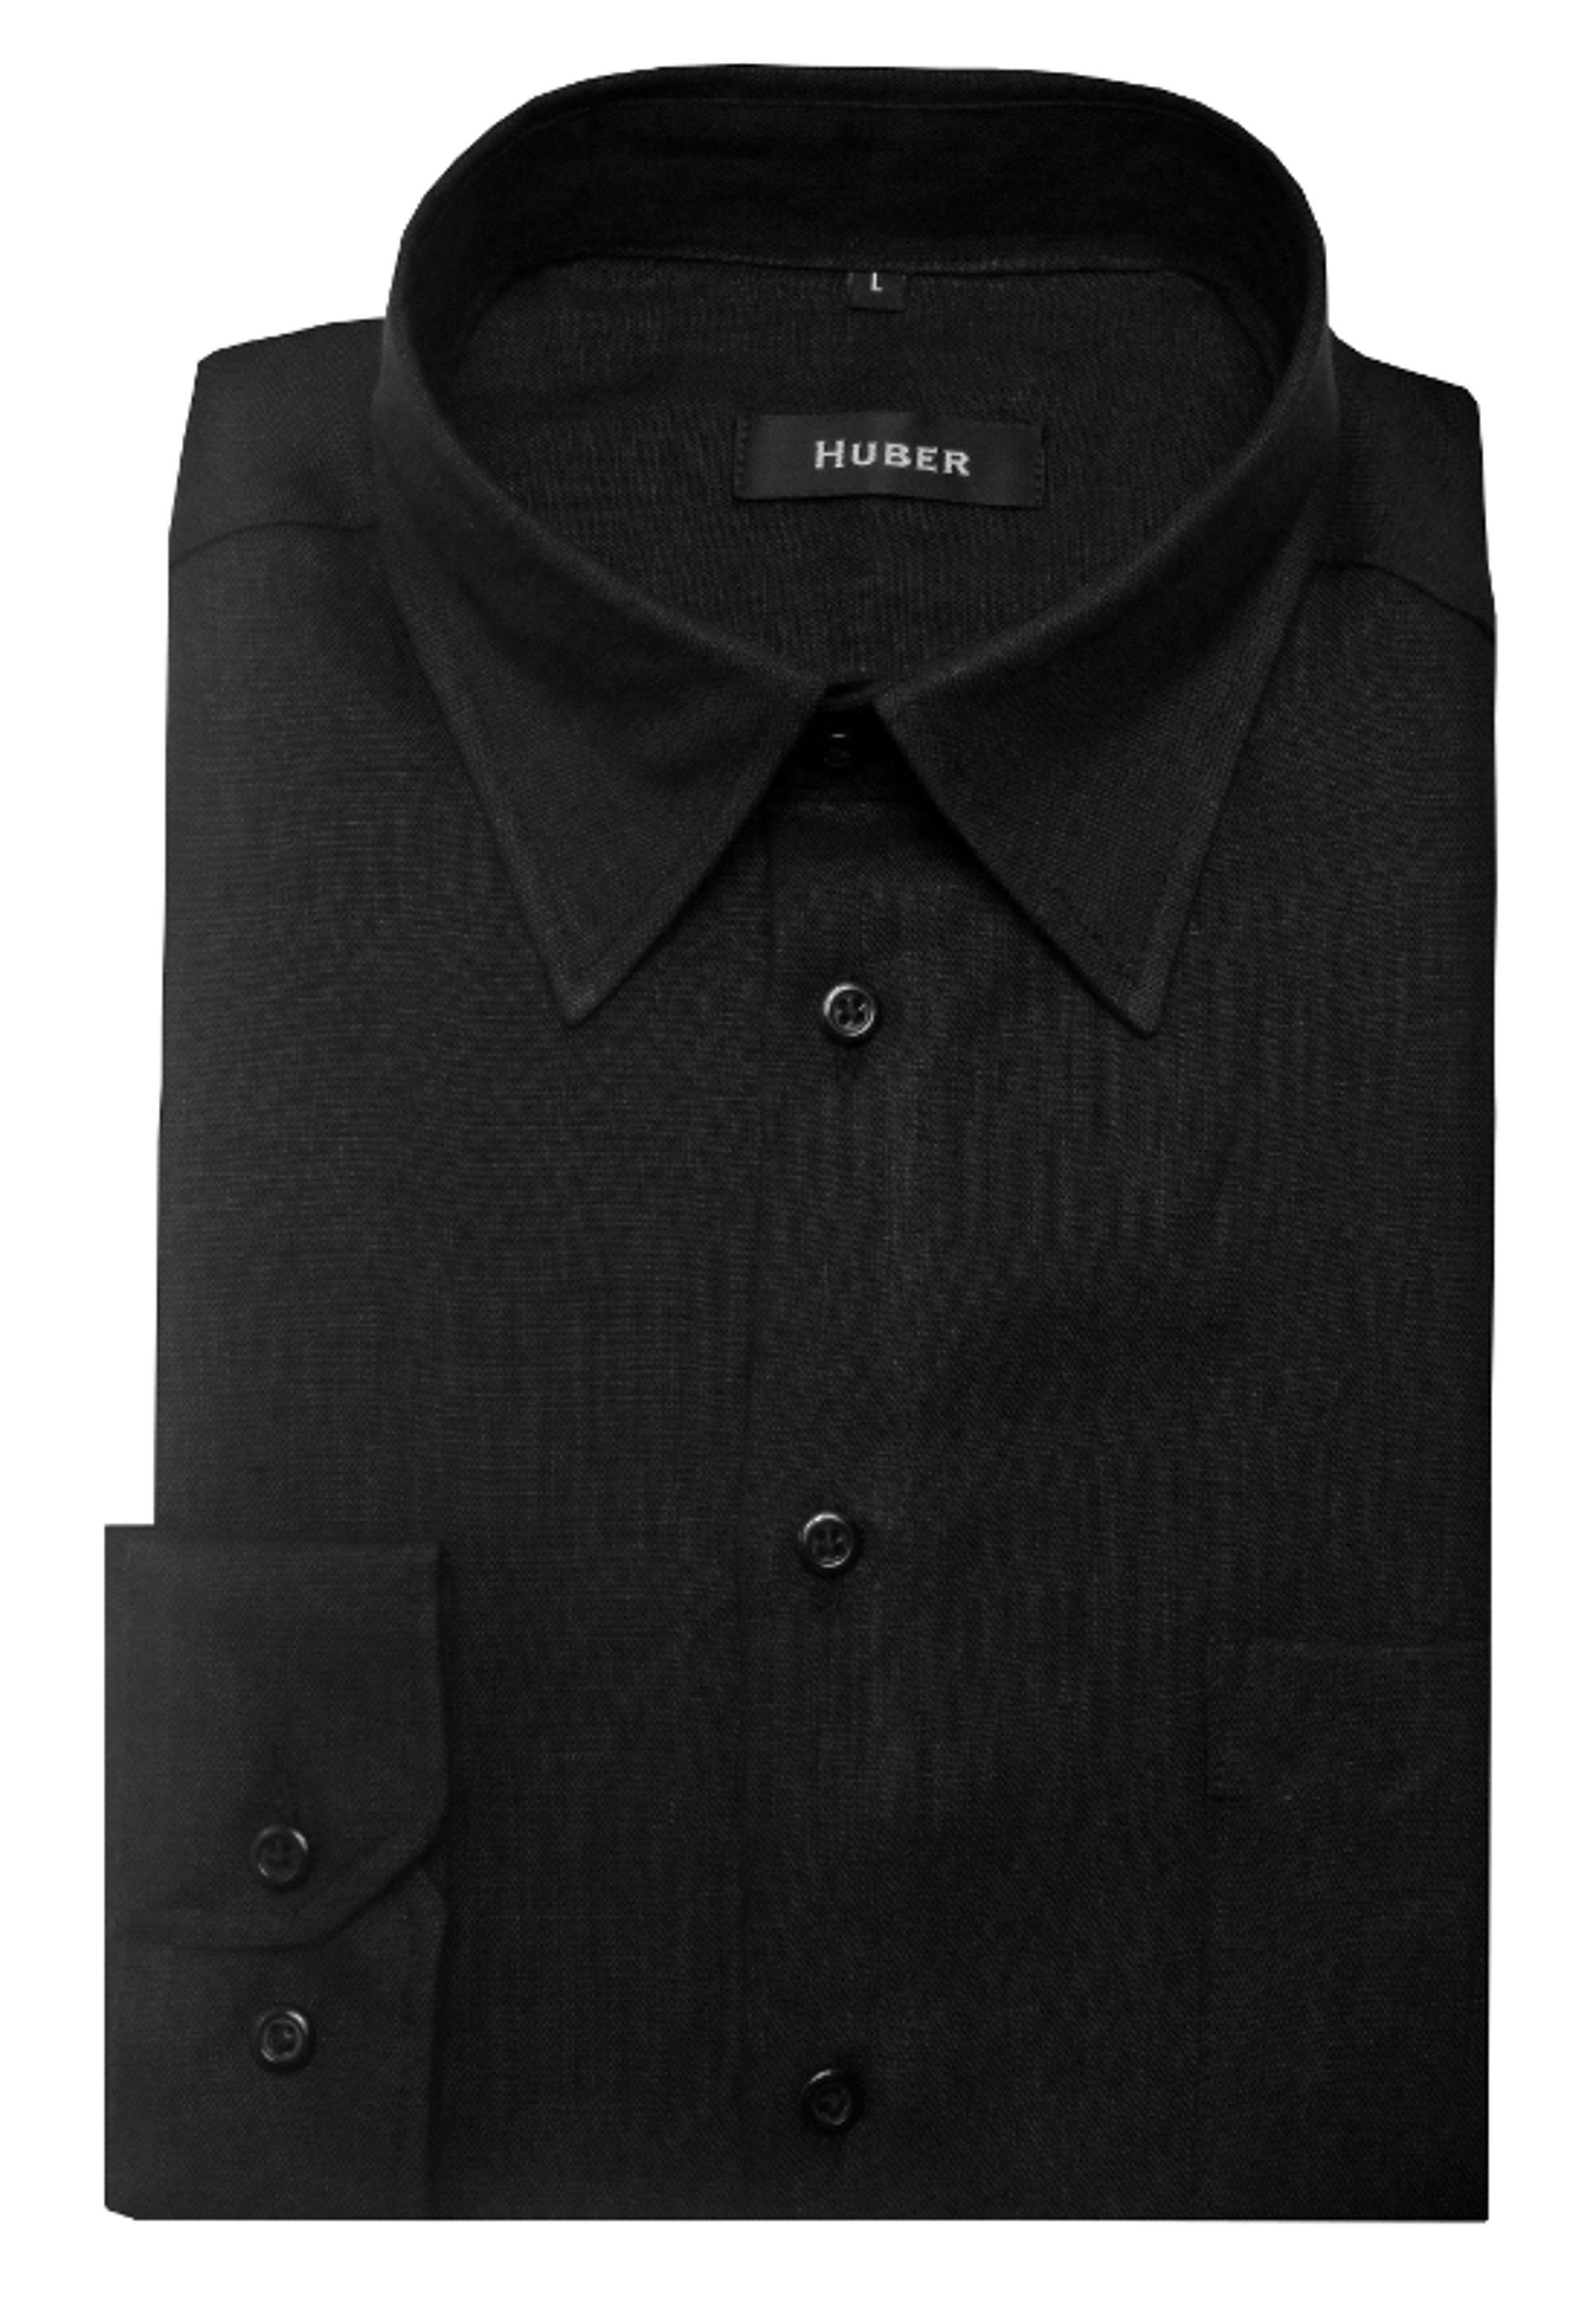 Huber HU-0053 Hemden nachhaltige Kentkragen, Made Leinen Naturfaser 100% in EU! Regular schwarz Langarmhemd